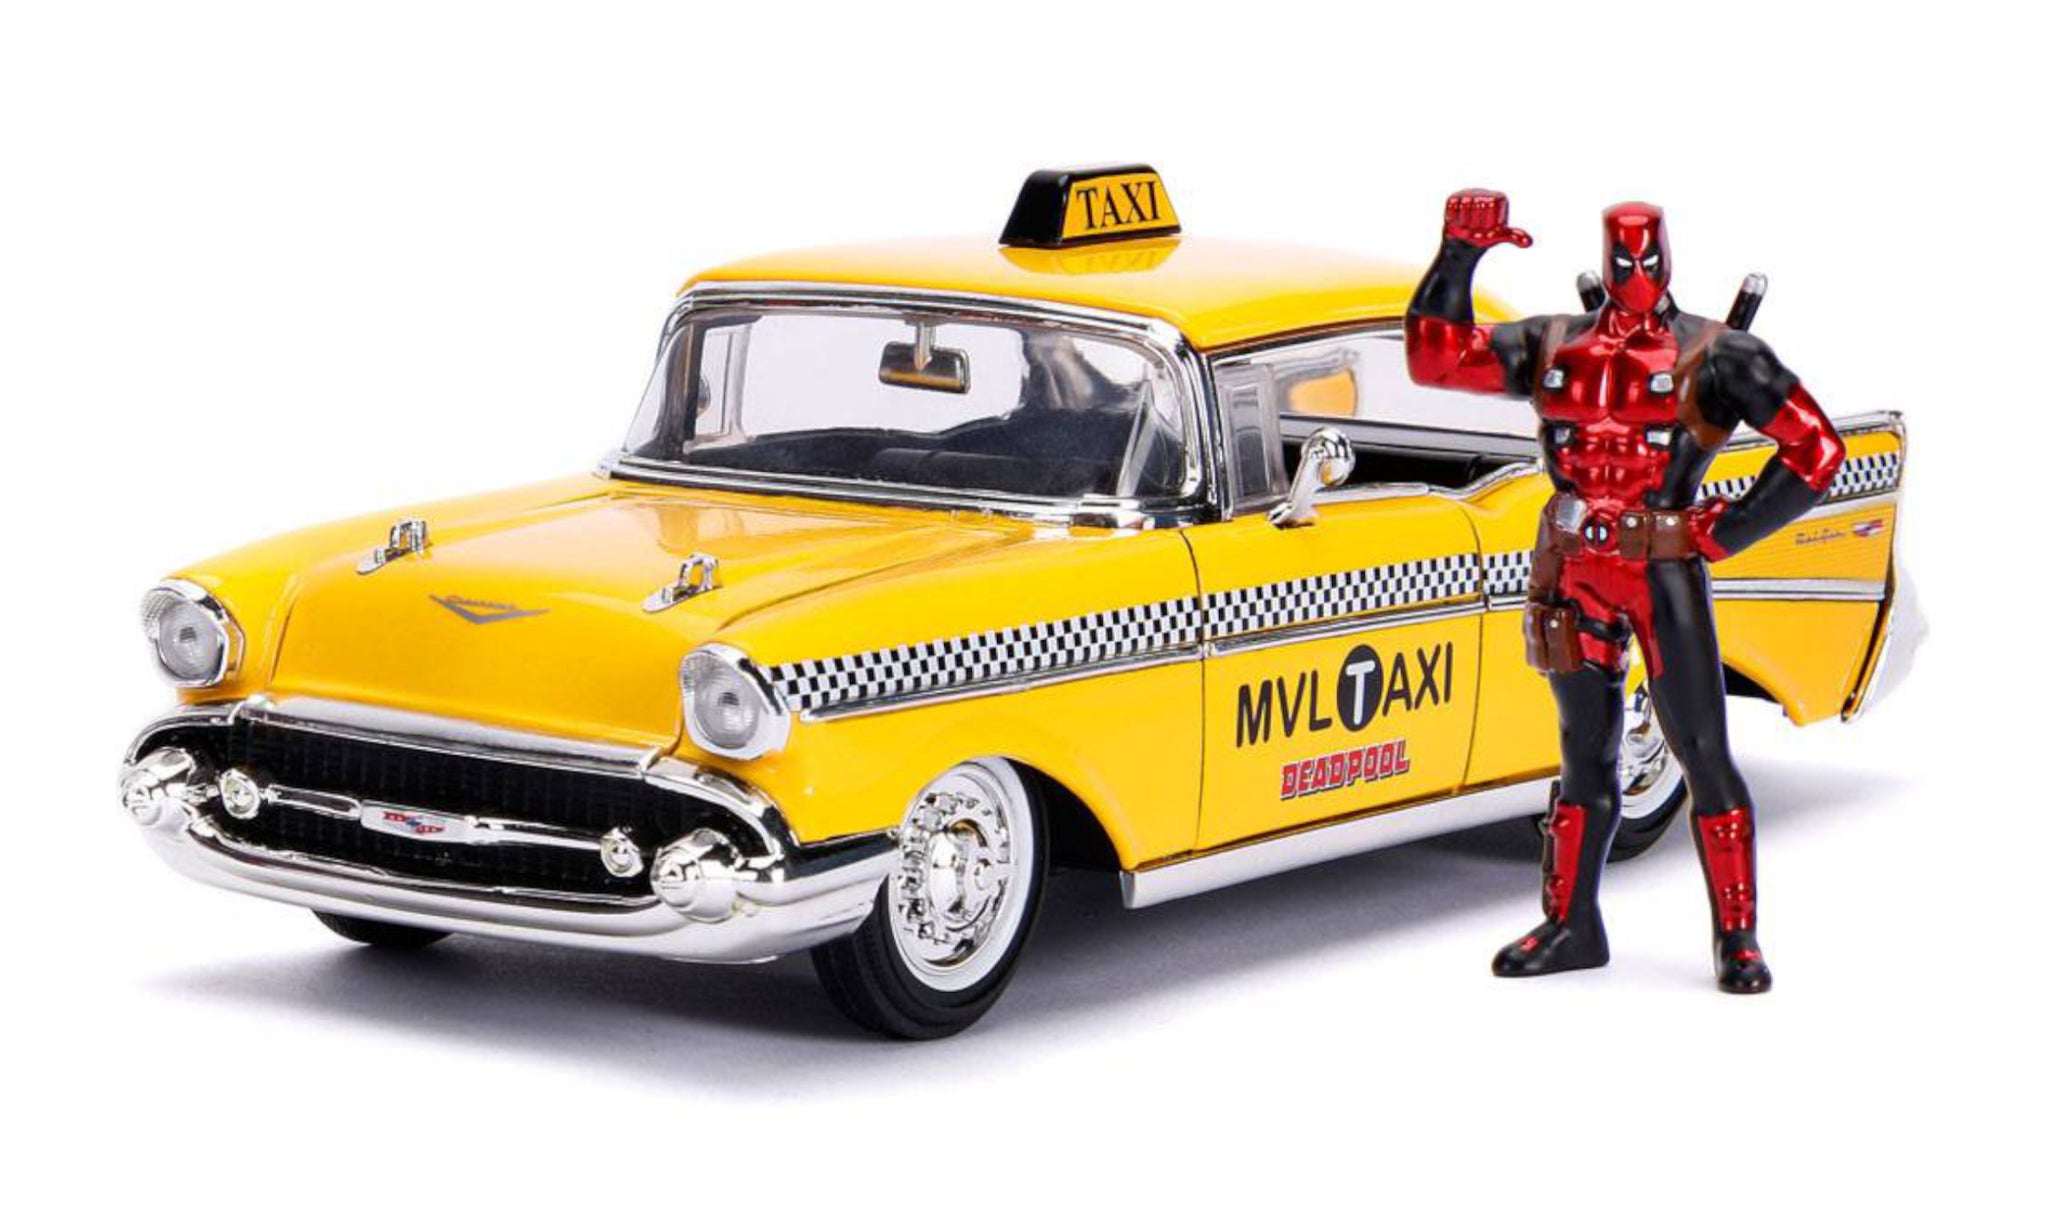 Deadpool Figur und Chevrolet Bel Air 1957 Auto, € 45,- (4623